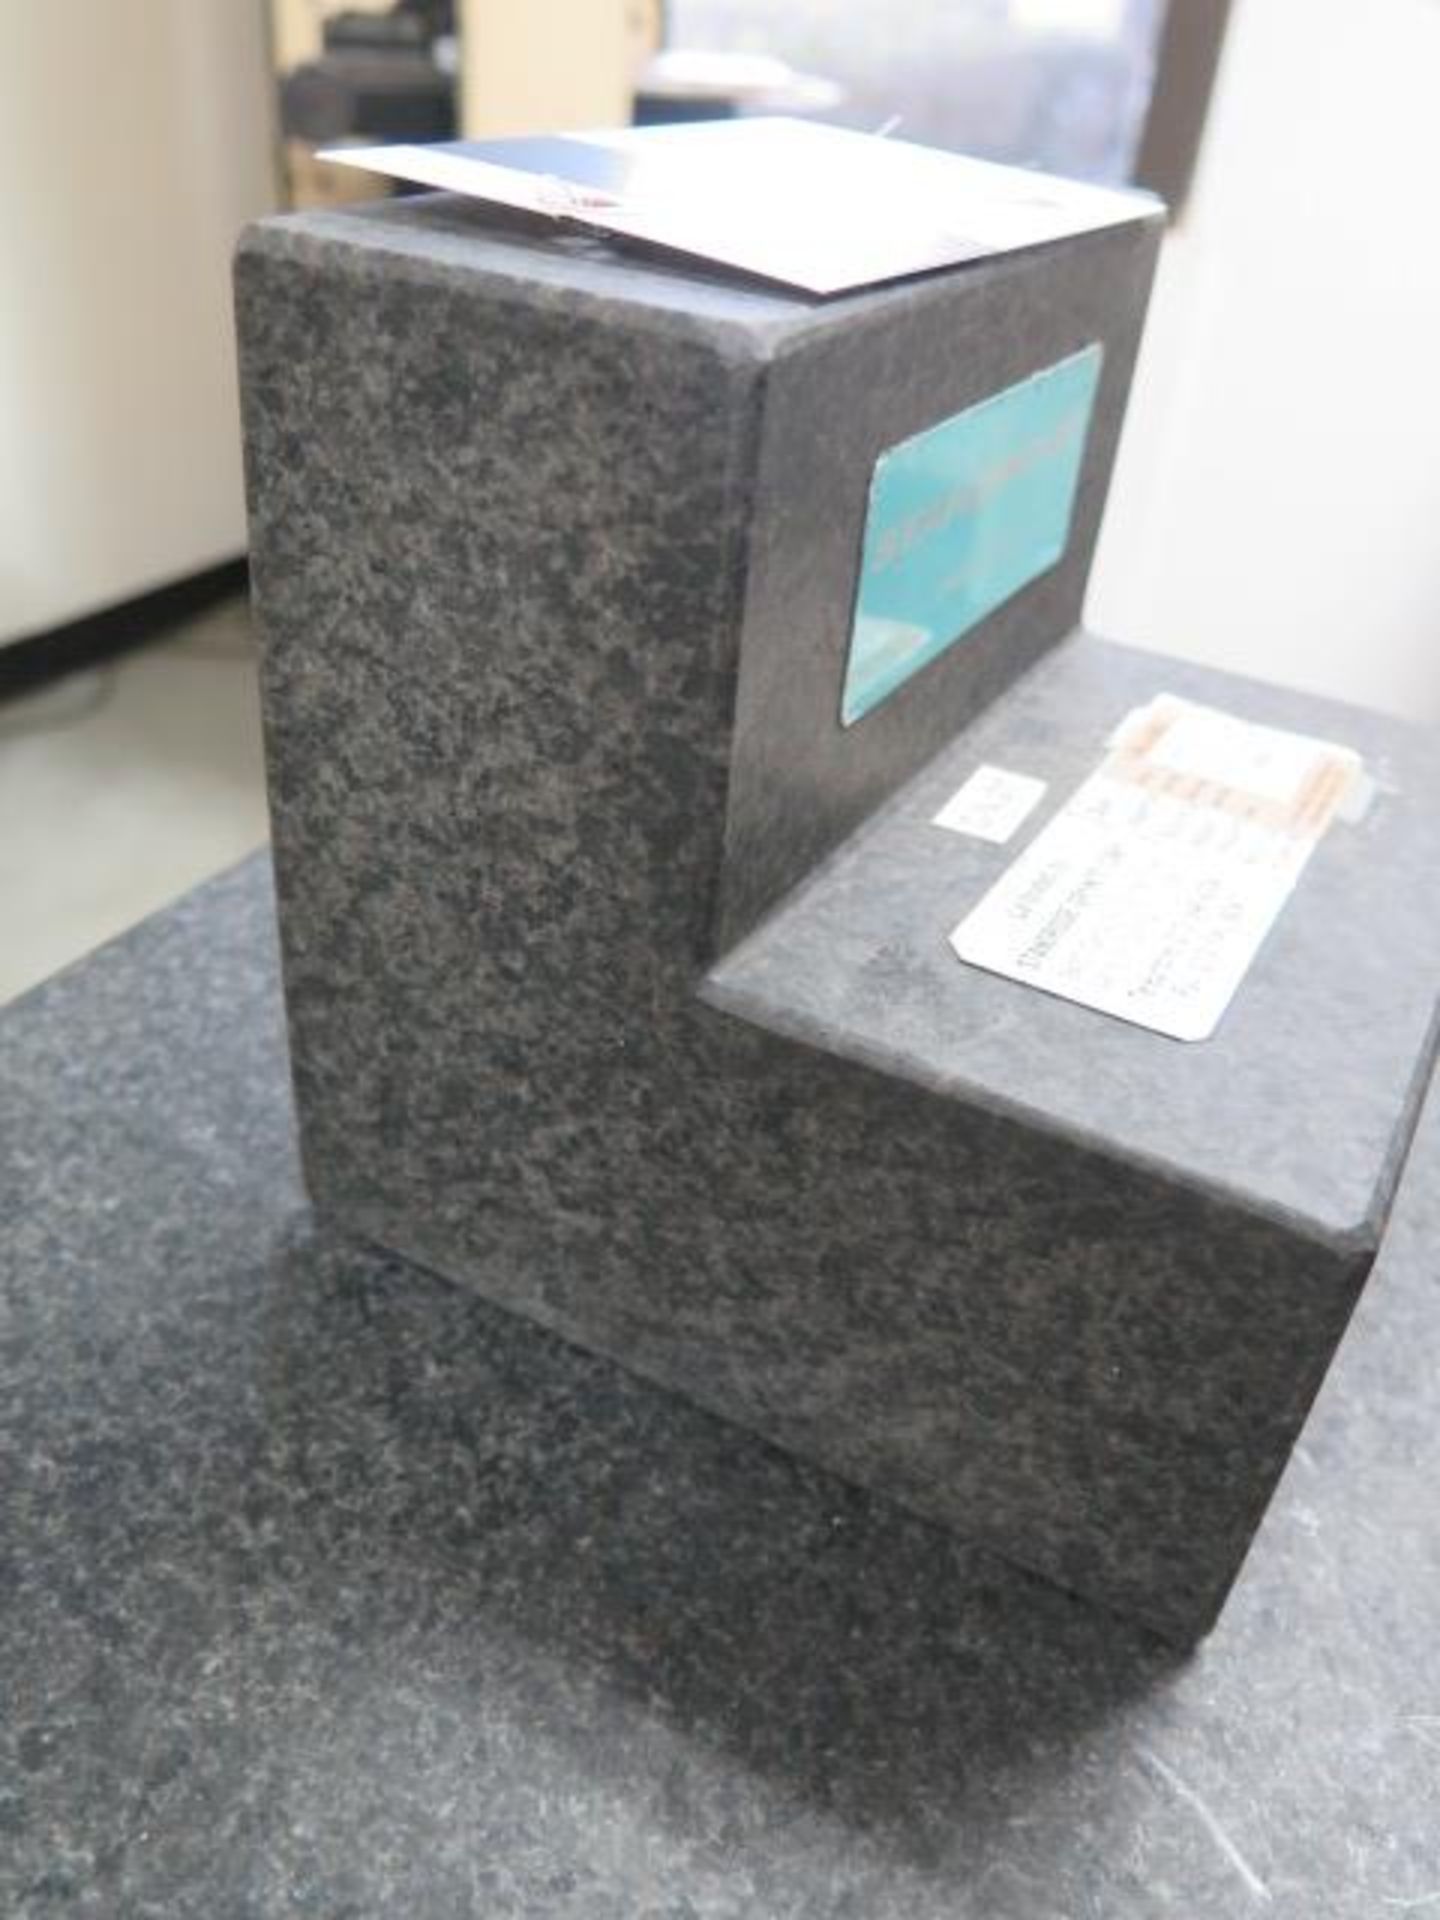 Standridge 6 ½” x 6 ½” x 6 ½” Granite Step Block (SOLD AS-IS - NO WARRANTY) - Image 2 of 3